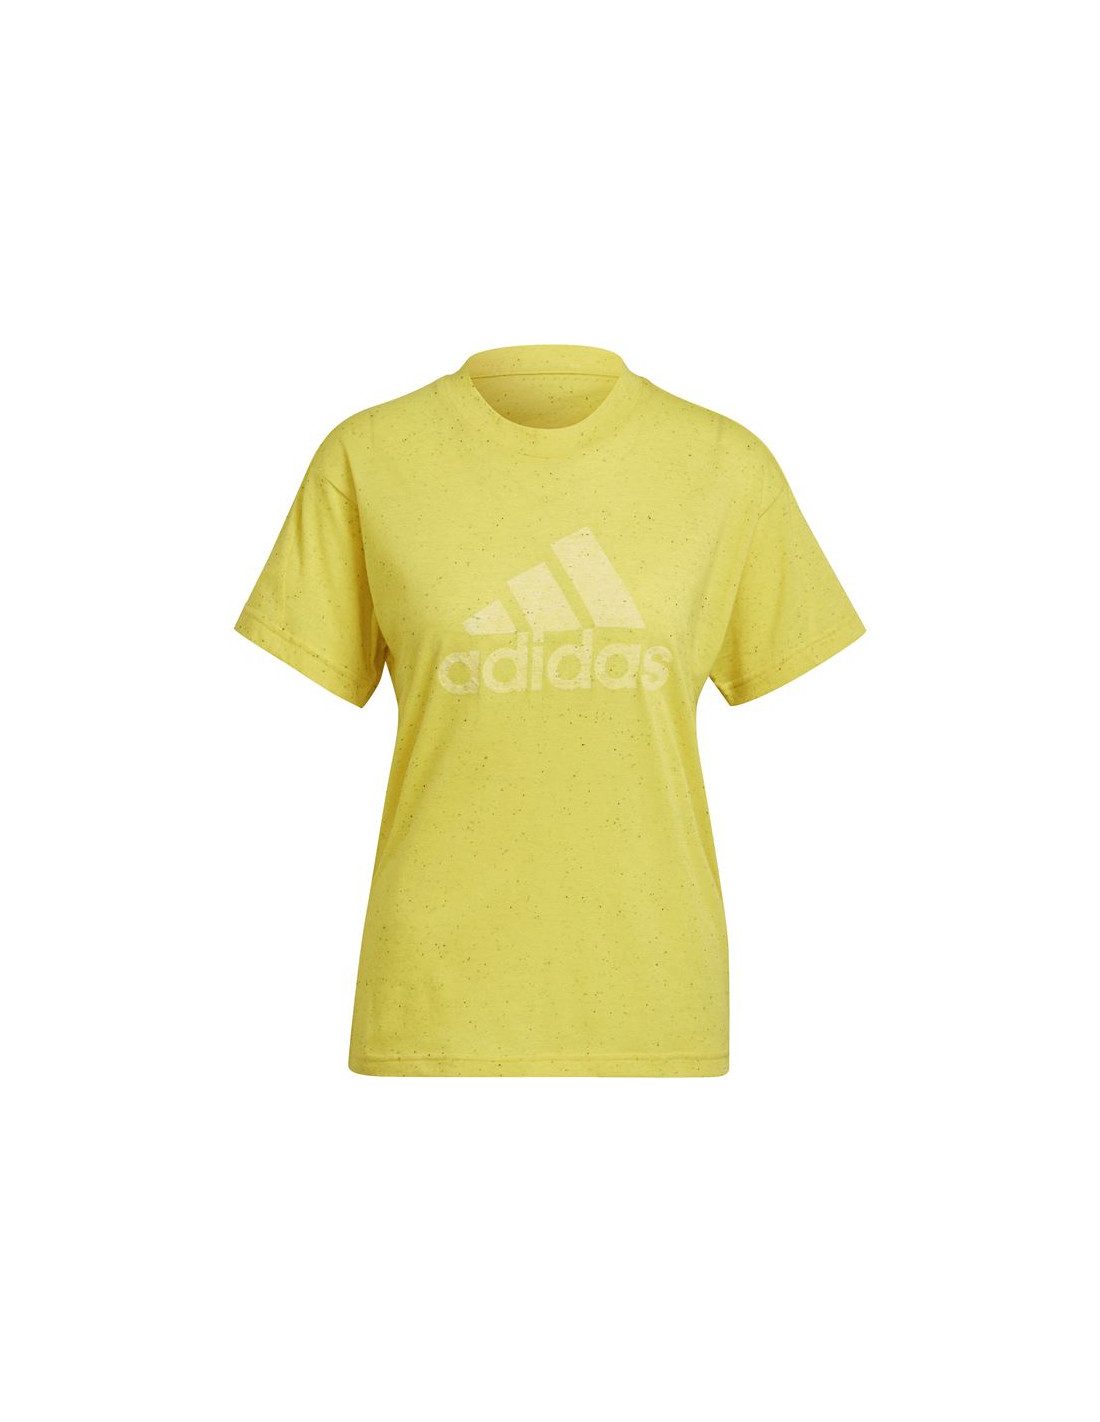 Camiseta adidas future icons winners 3 mujer yellow